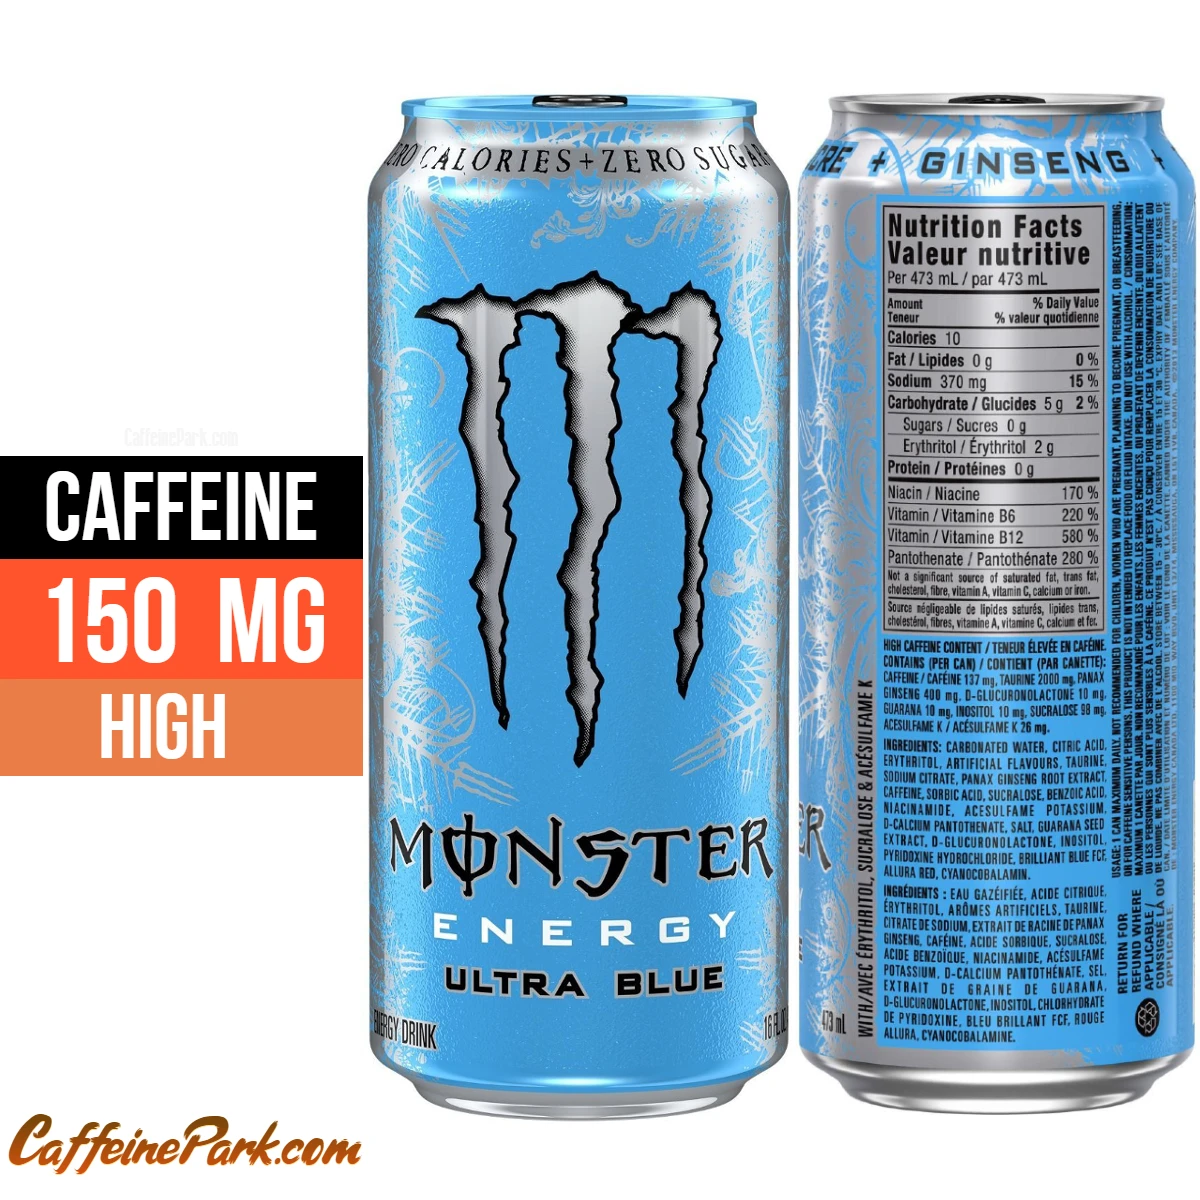 Monster Ultra: Understanding the Caffeine is Monster Ultra?